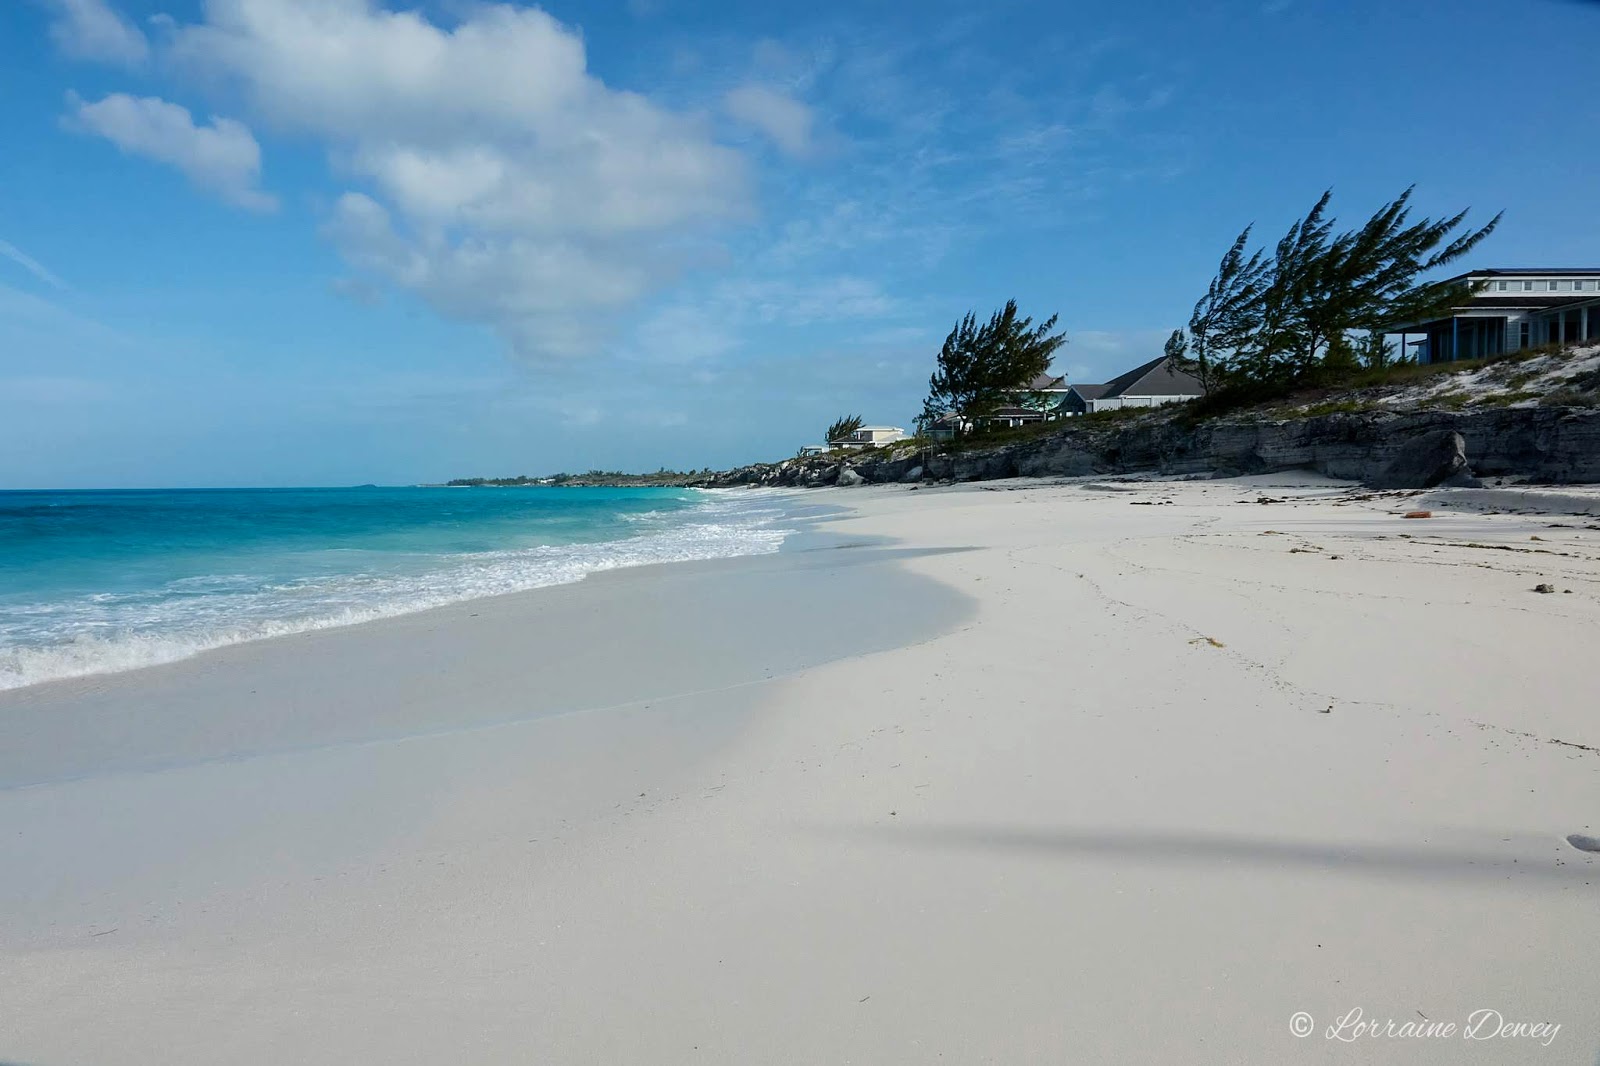 Foto di Prime cut beach con una superficie del sabbia pura bianca